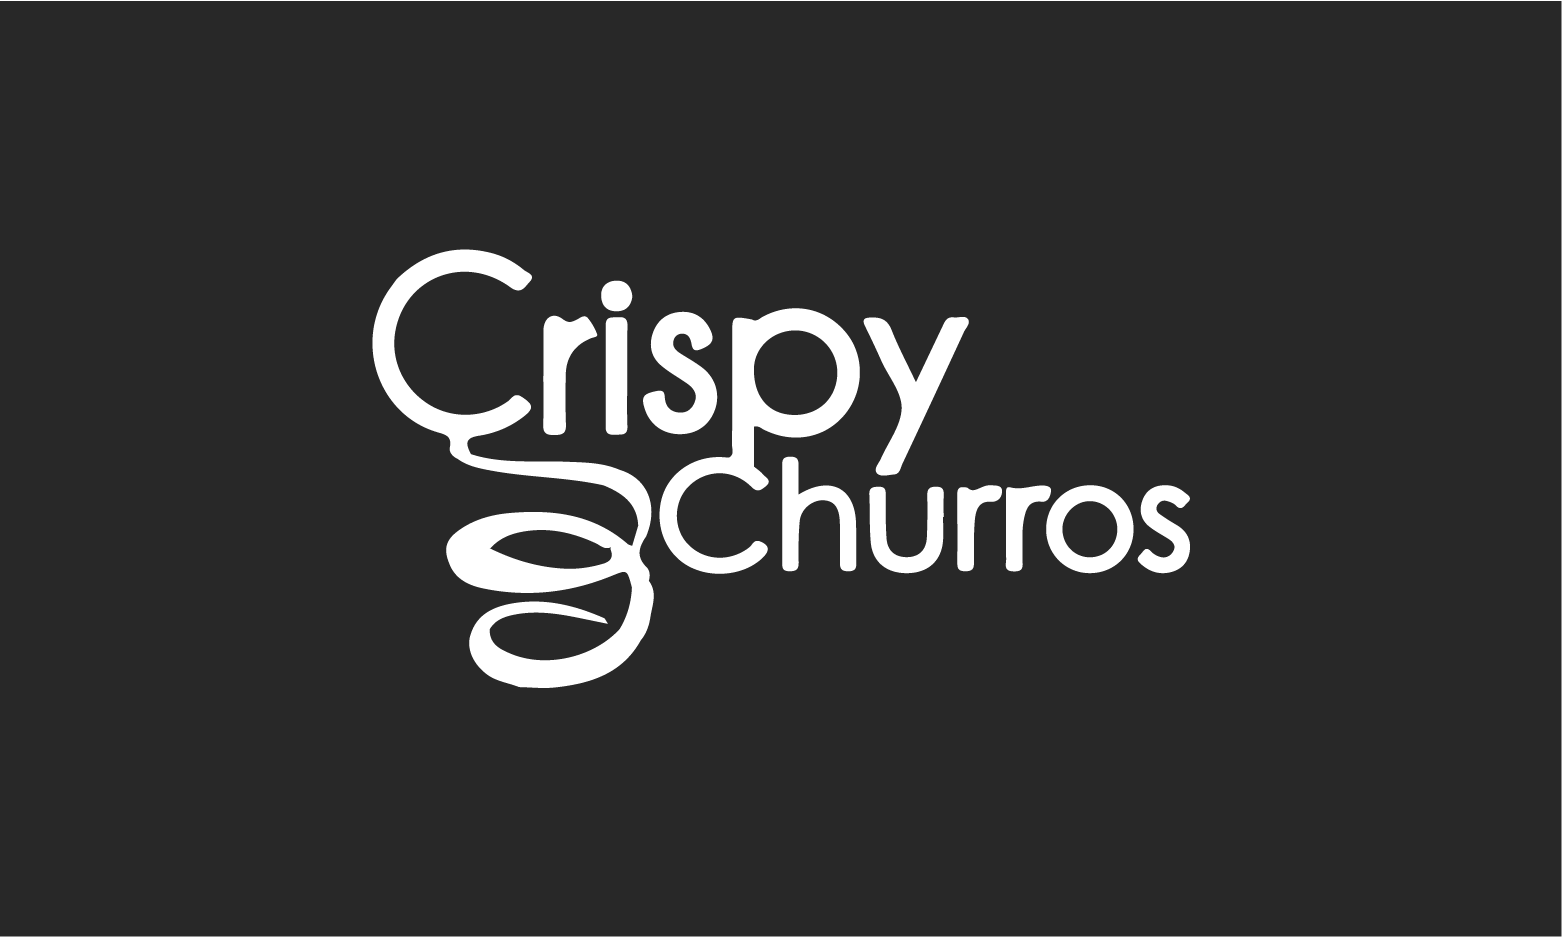 Crispy Churros